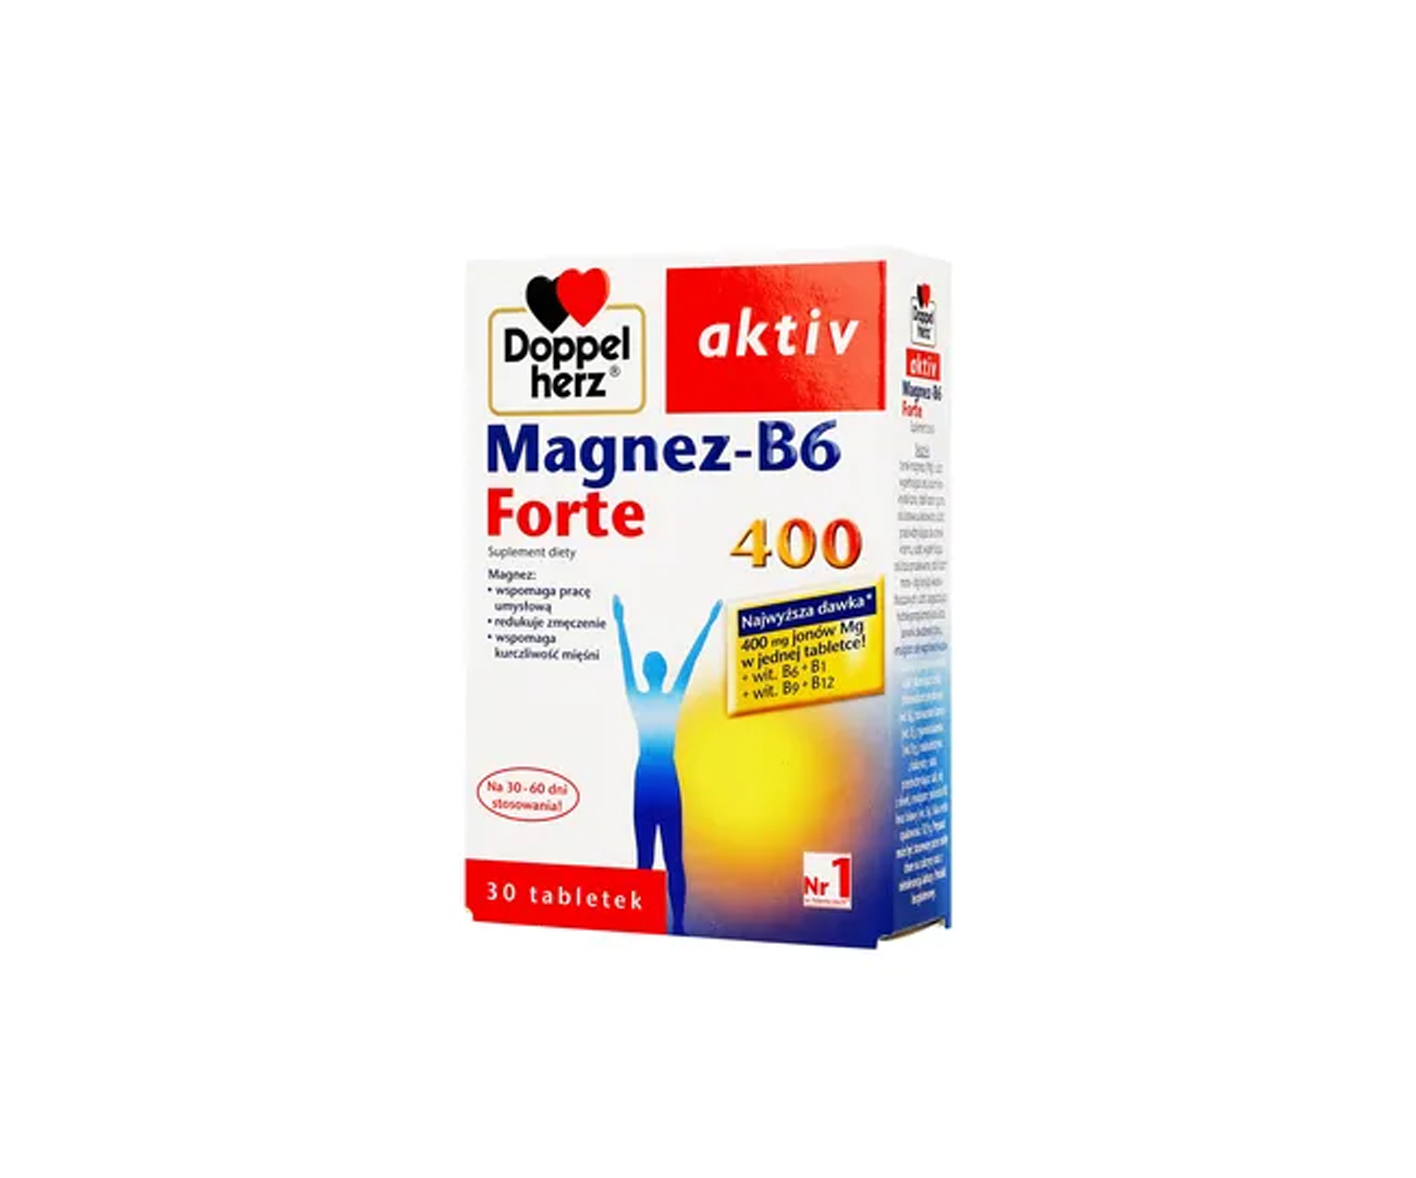 Doppelherz Aktiv, magnesium - B6 Forte